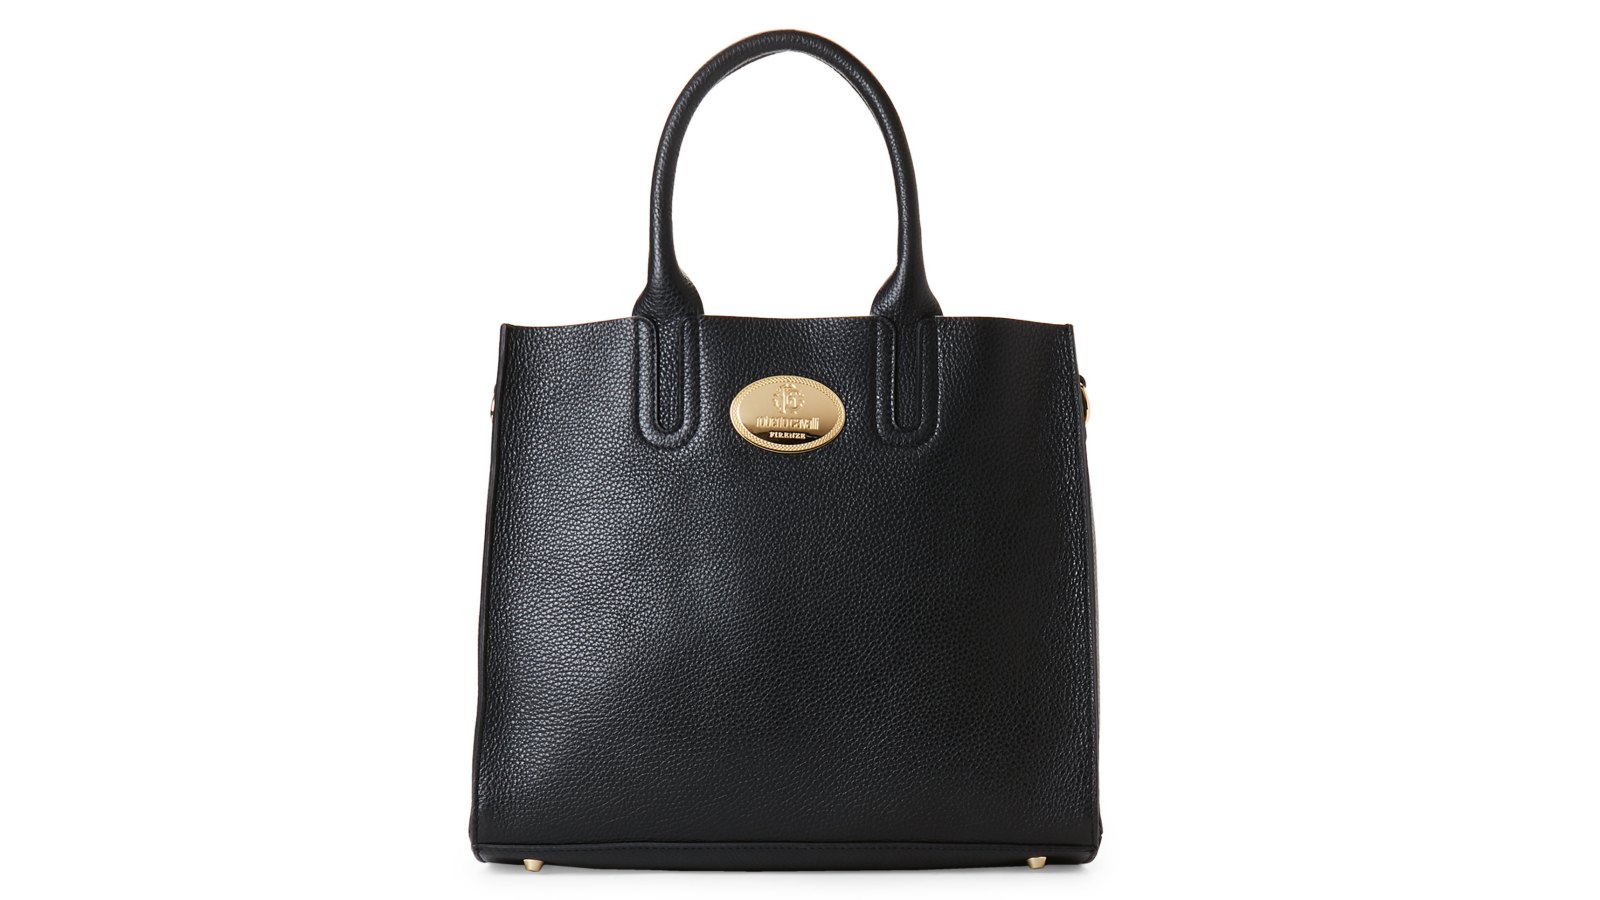 Has anyone stumbled upon luxury handbags at Costco